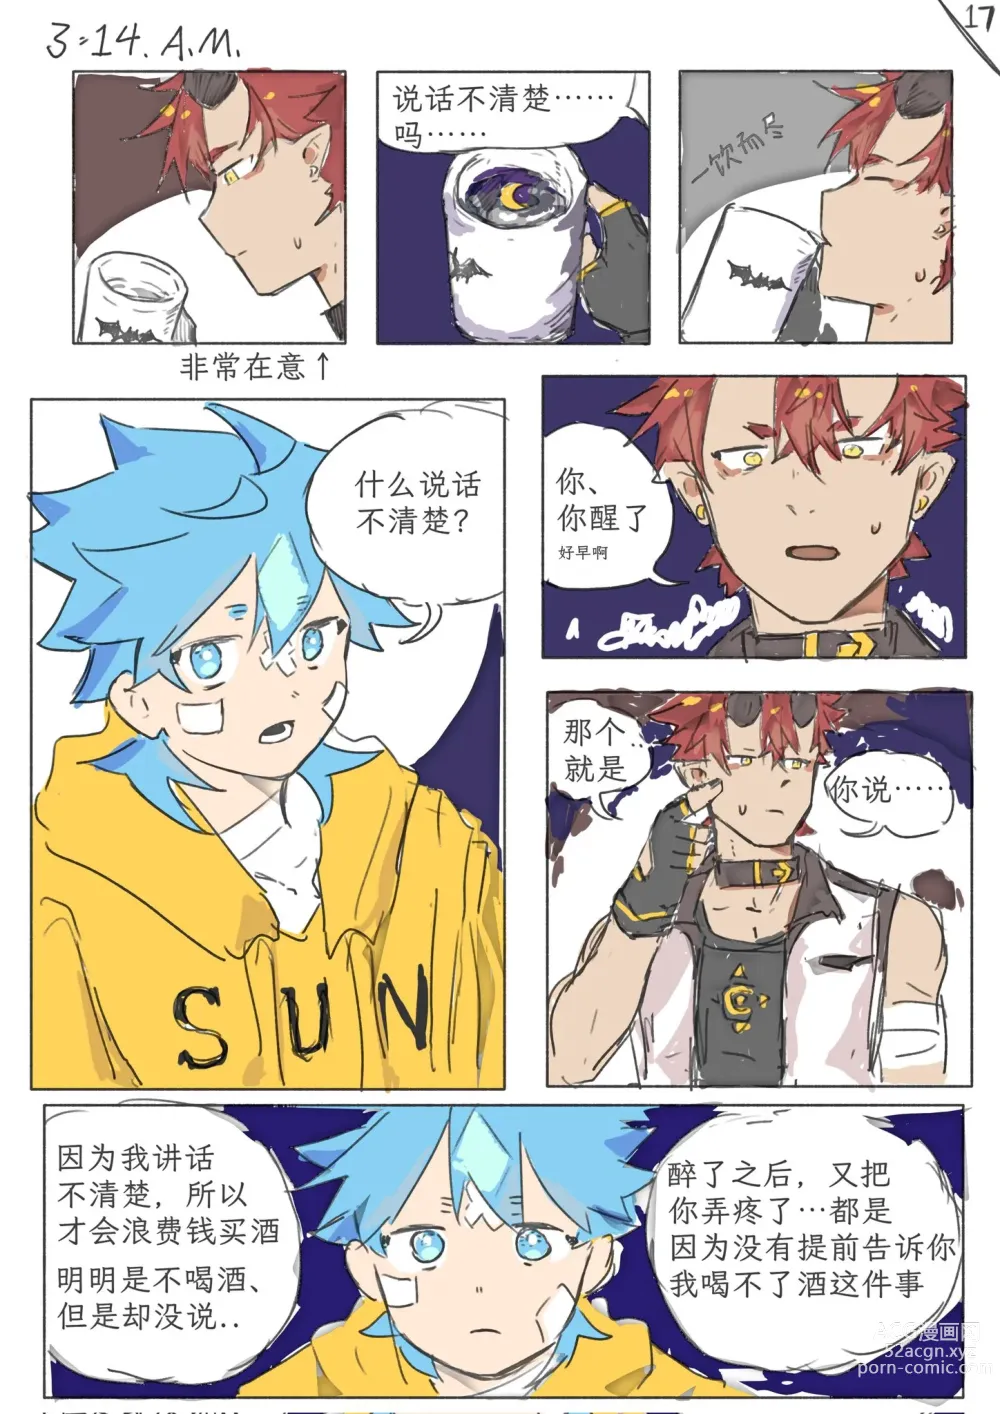 Page 17 of doujinshi Twitter short manga